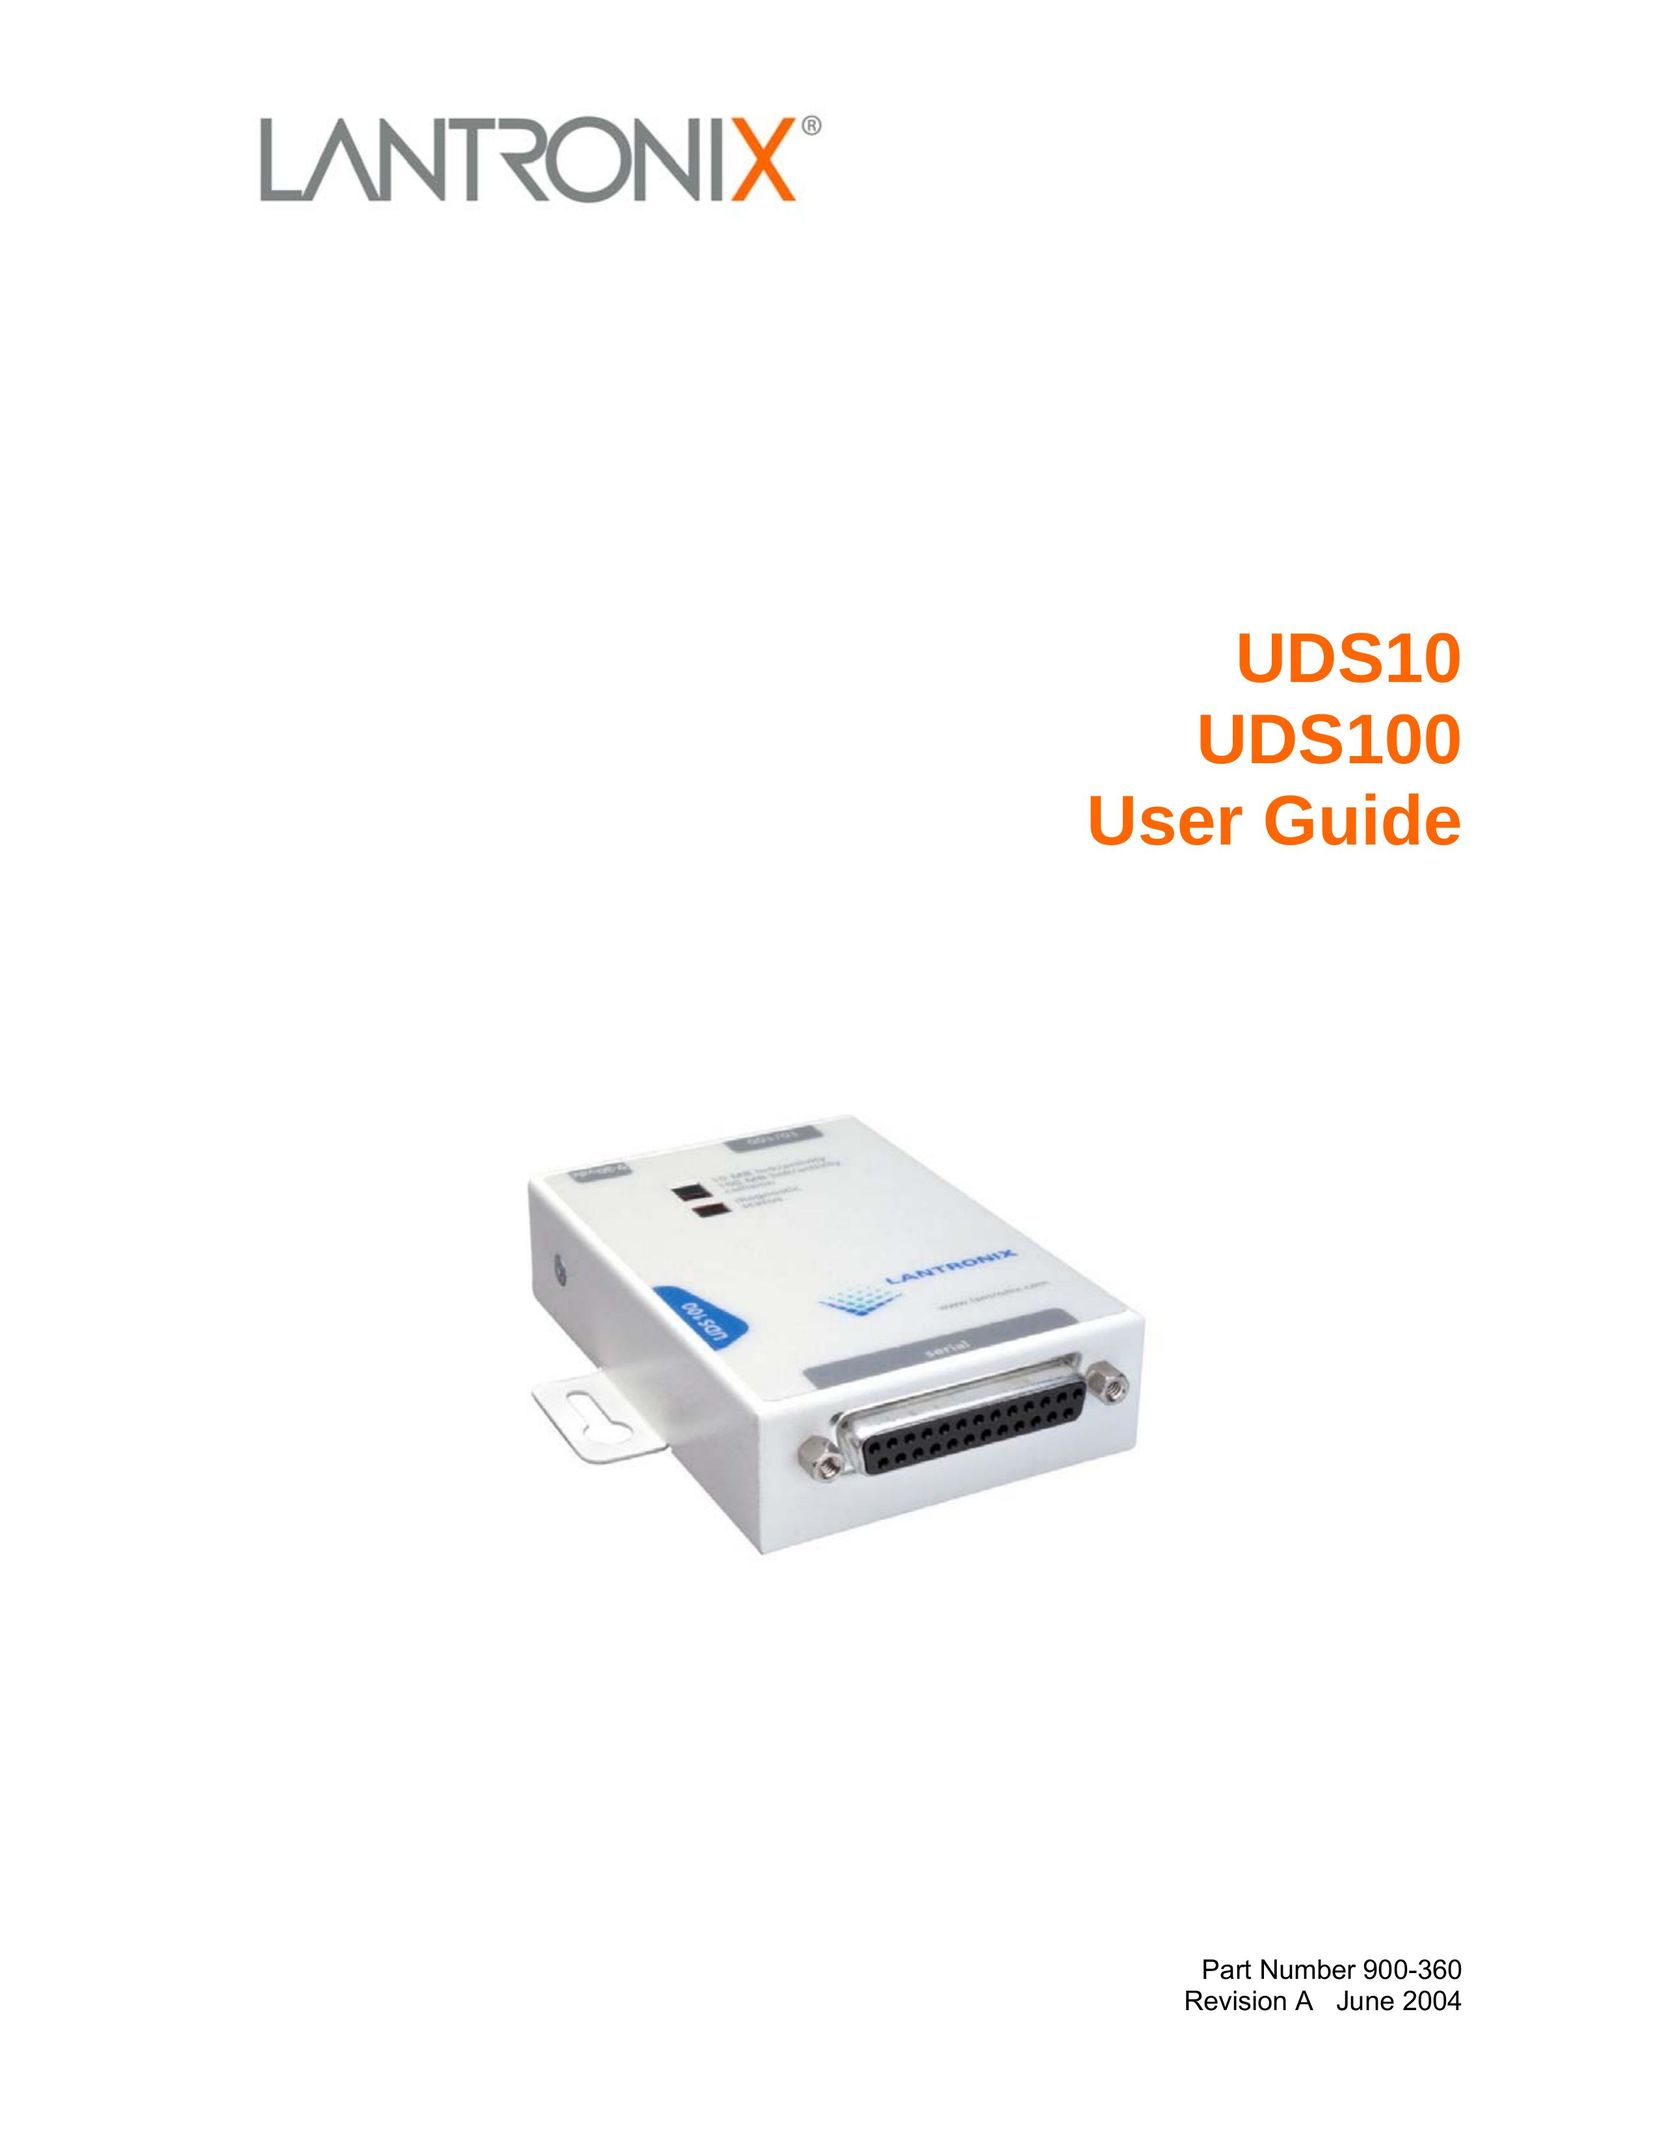 Lantronix UDS100 Network Card User Manual